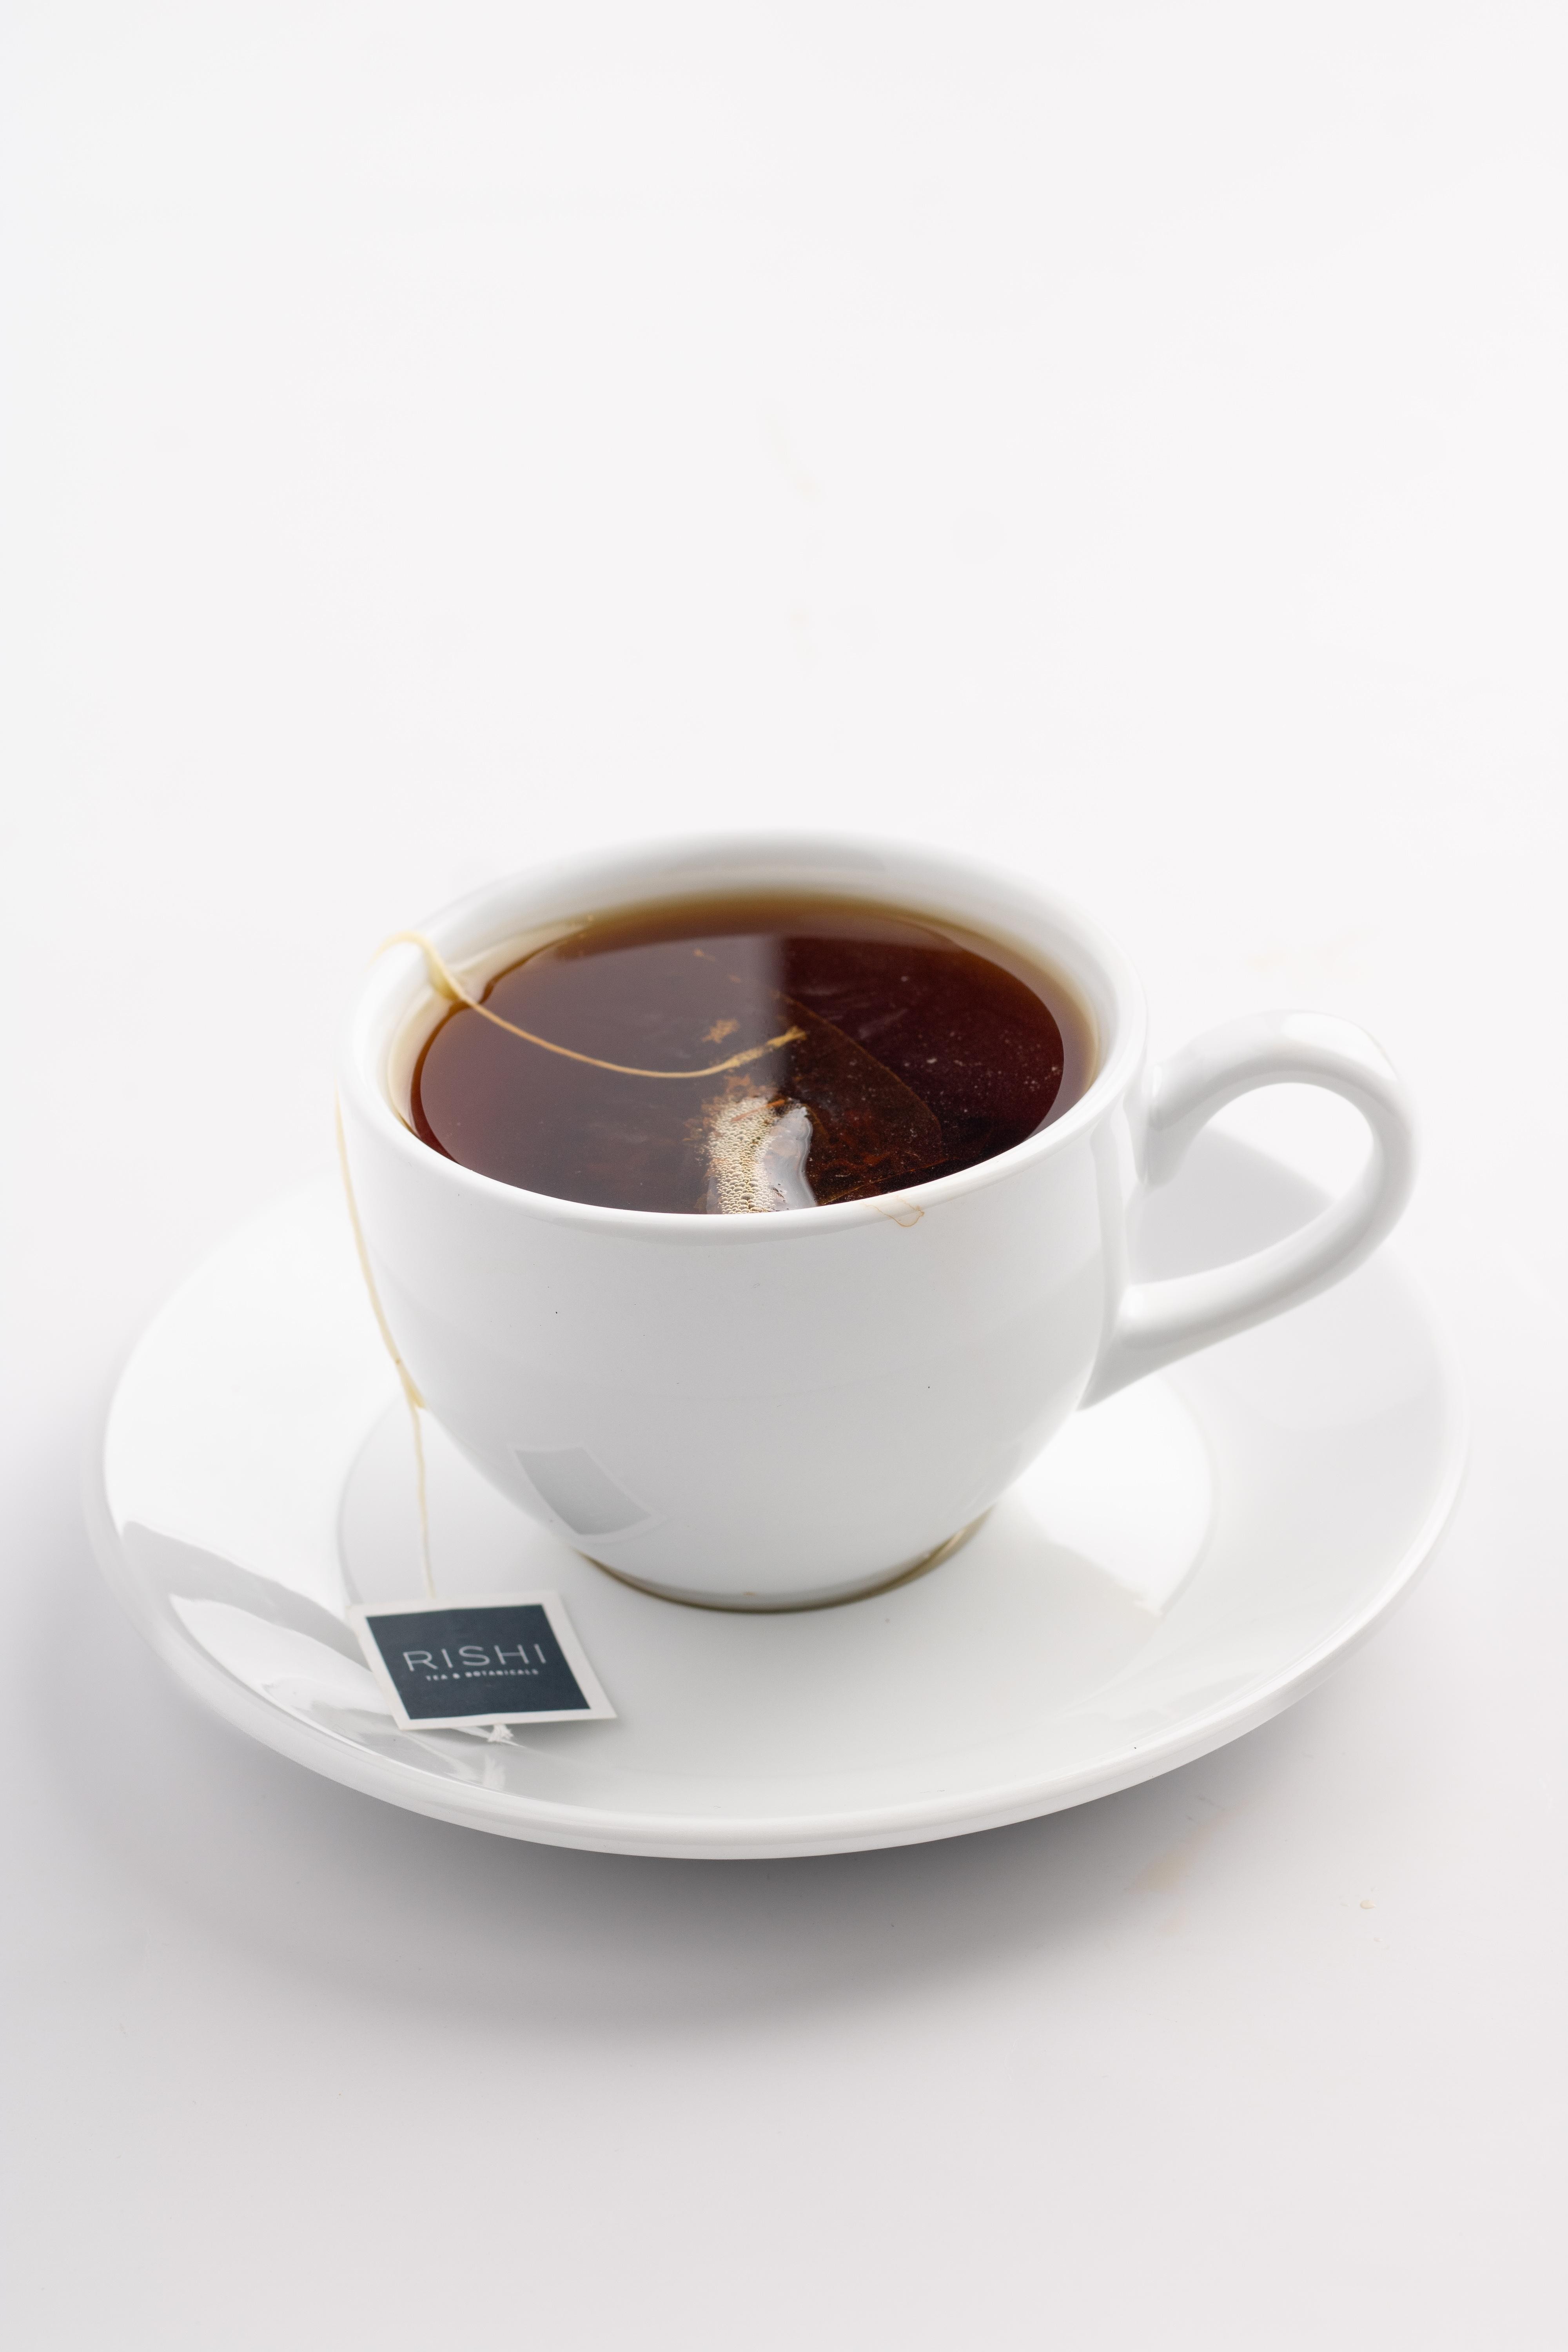 VÄRDERA Coffee cup and saucer, white - IKEA